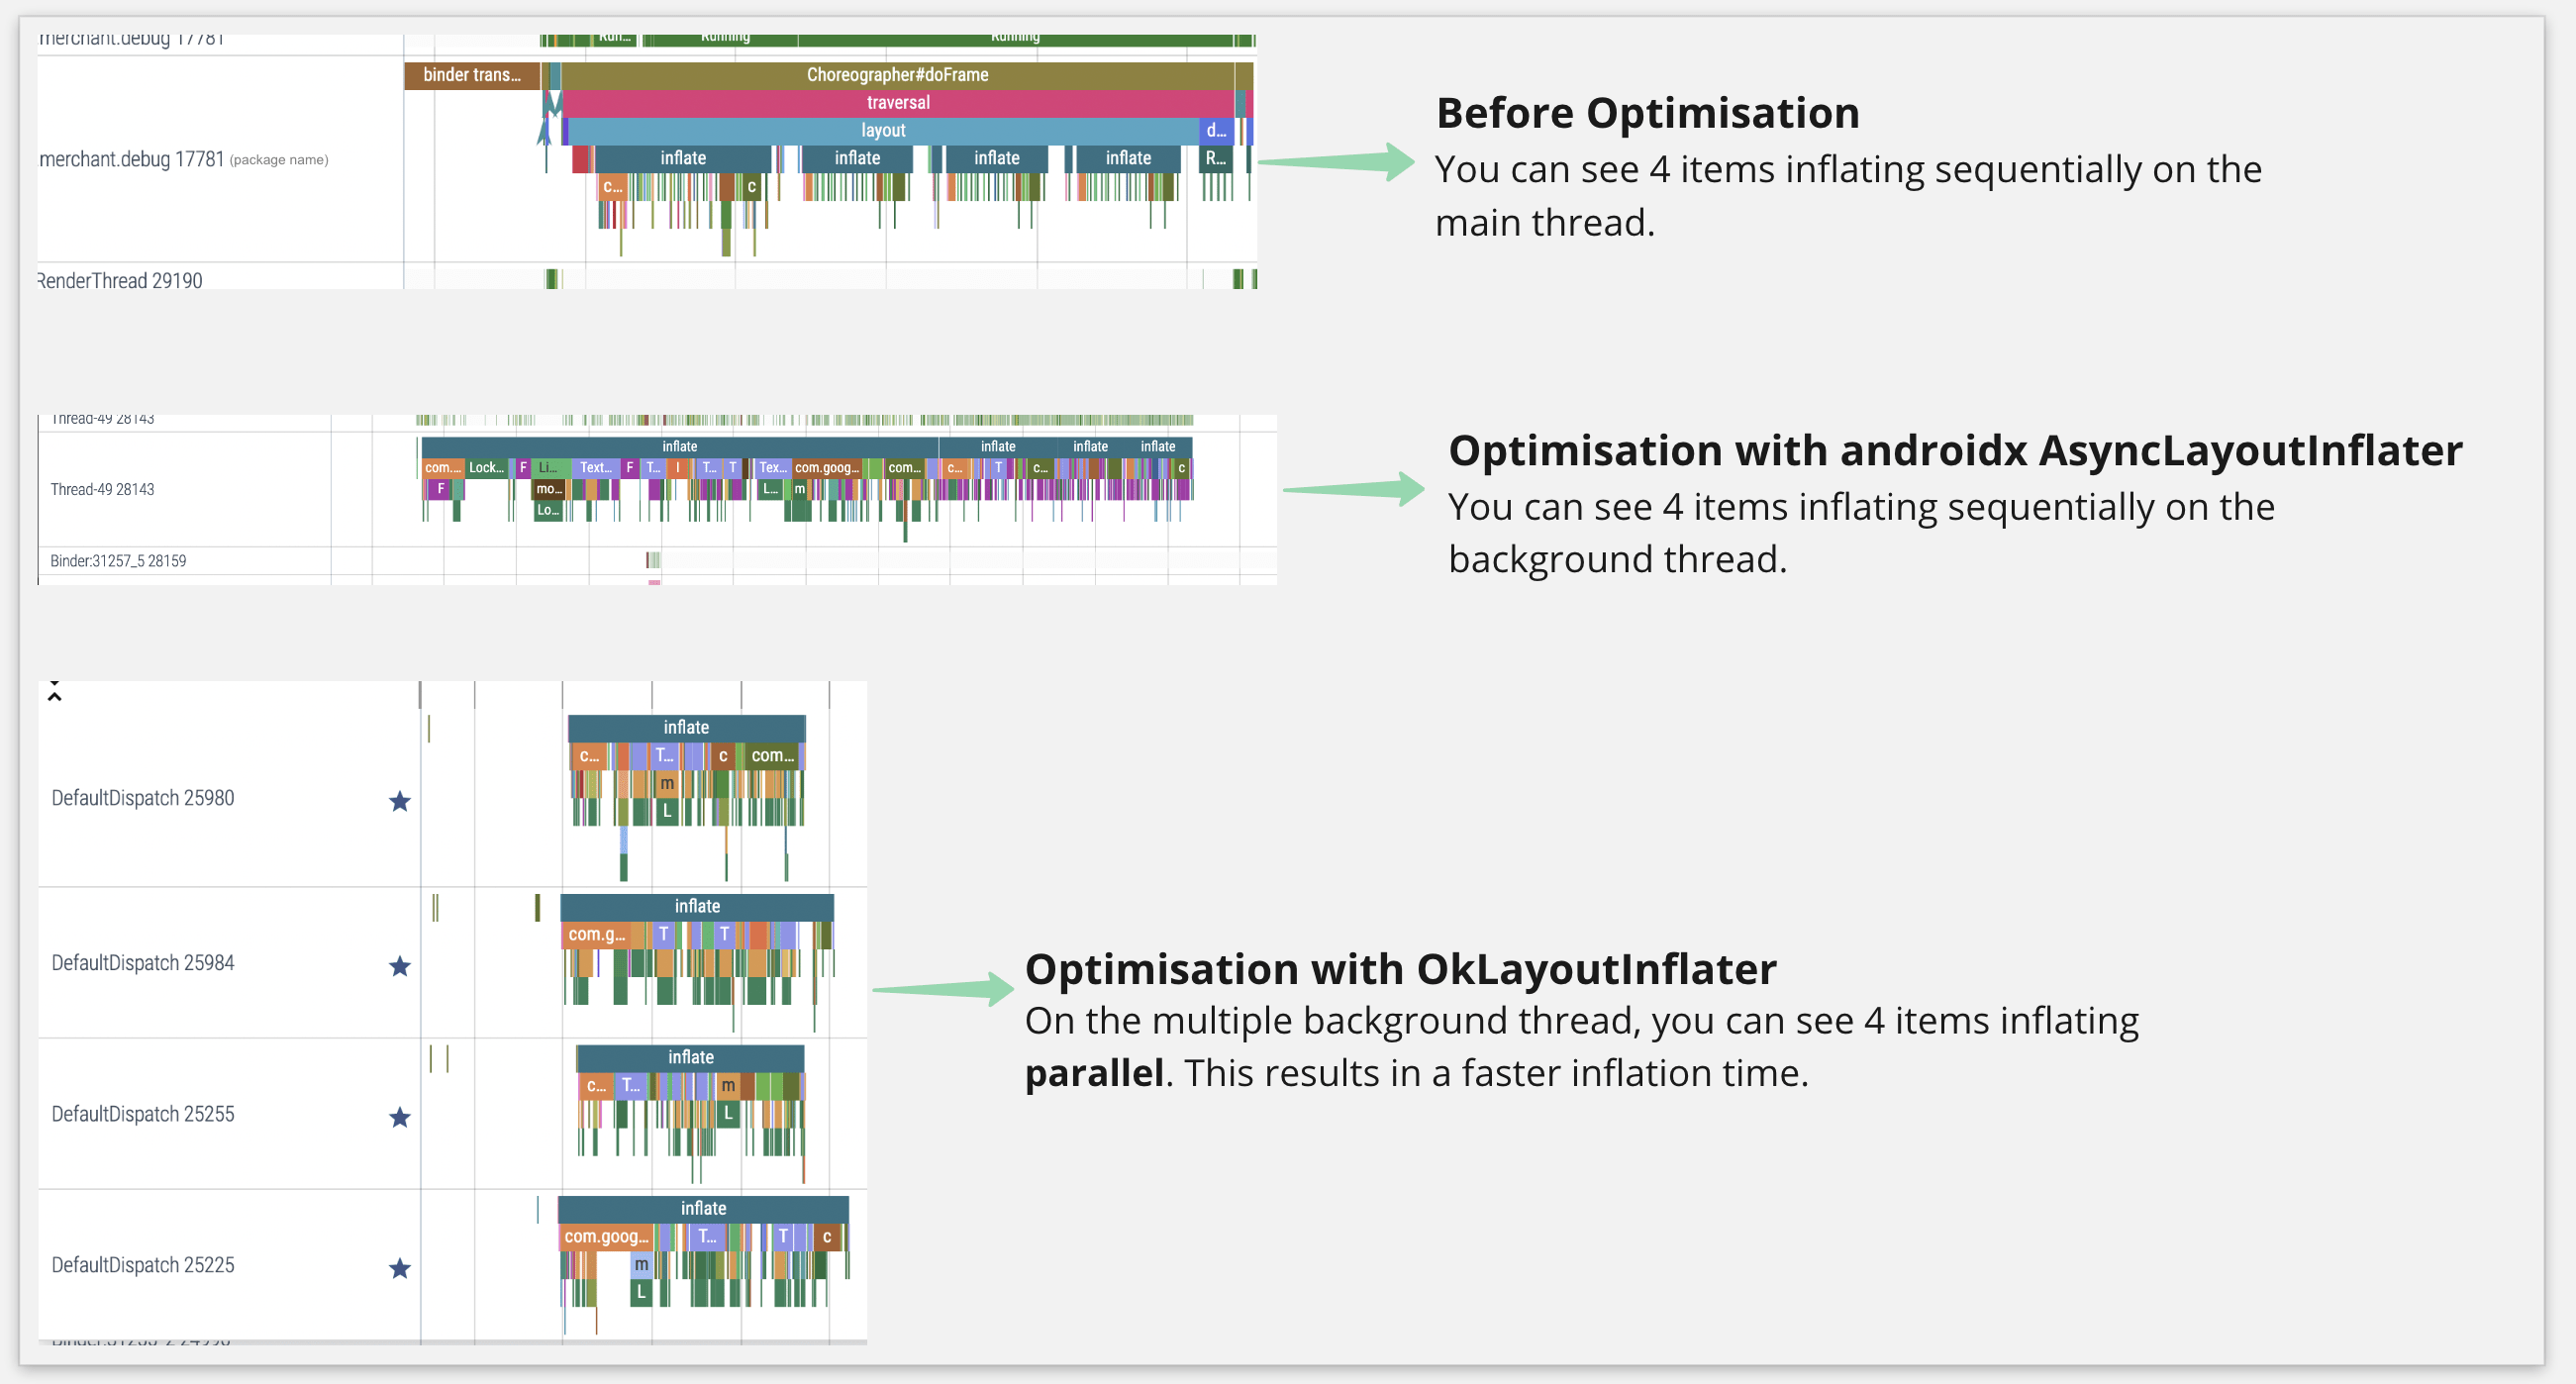 Performance improvement of OkLayoutInflator.